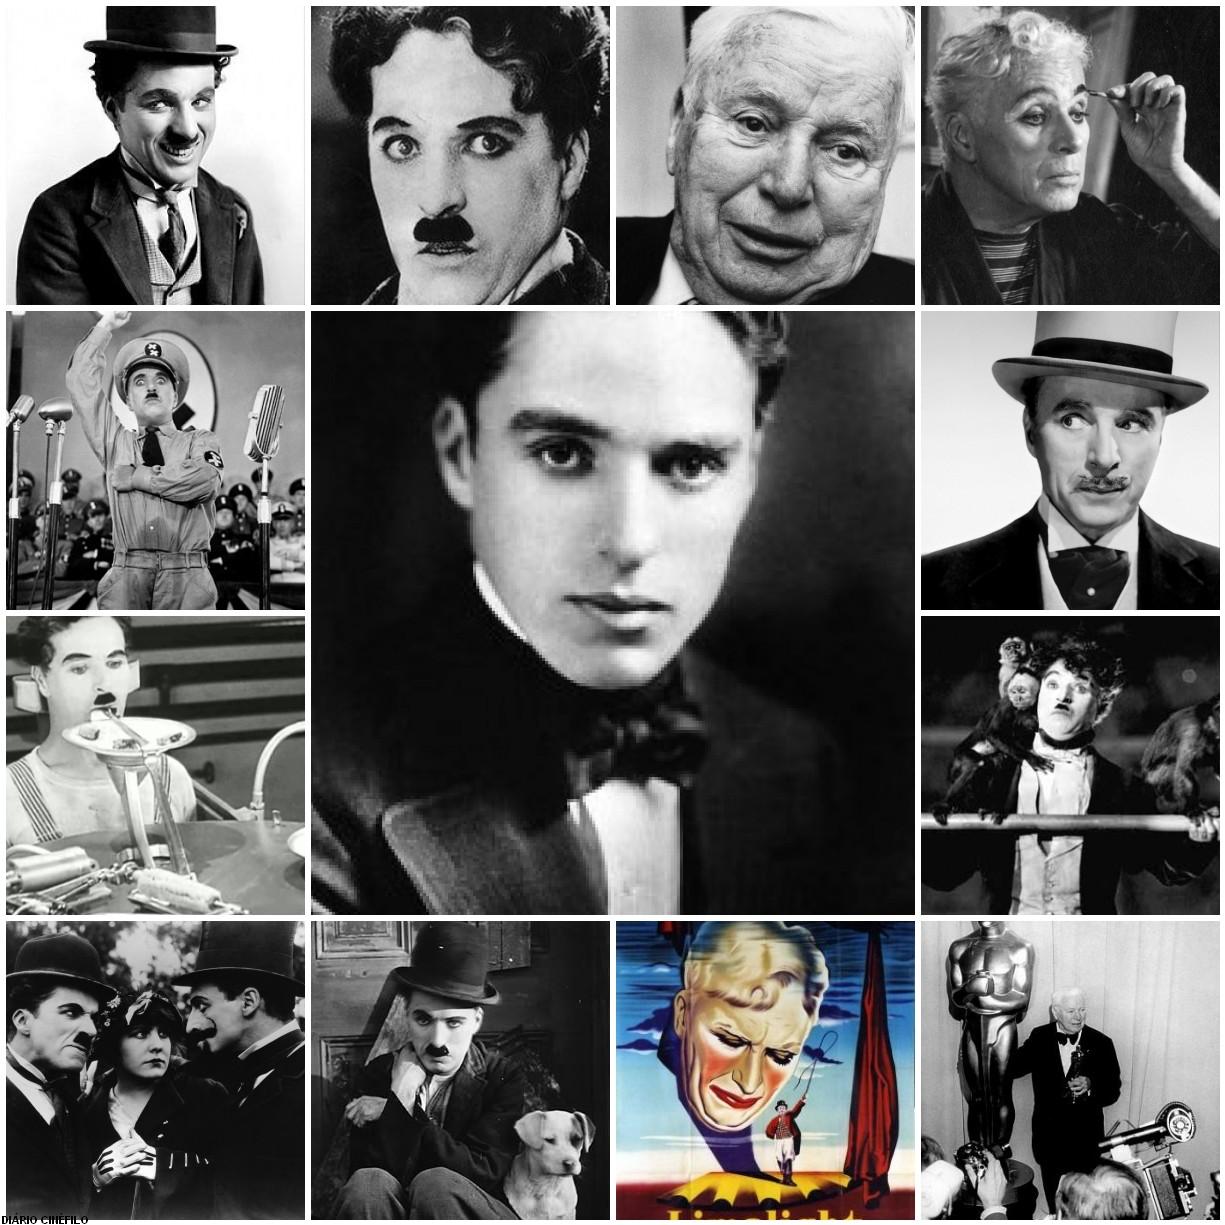 http://2.bp.blogspot.com/-QXsa33G9RWU/Tiyf4lu8-MI/AAAAAAAADdg/6tRo_7n5xjM/s1600/Charles+Chaplin+1.jpg